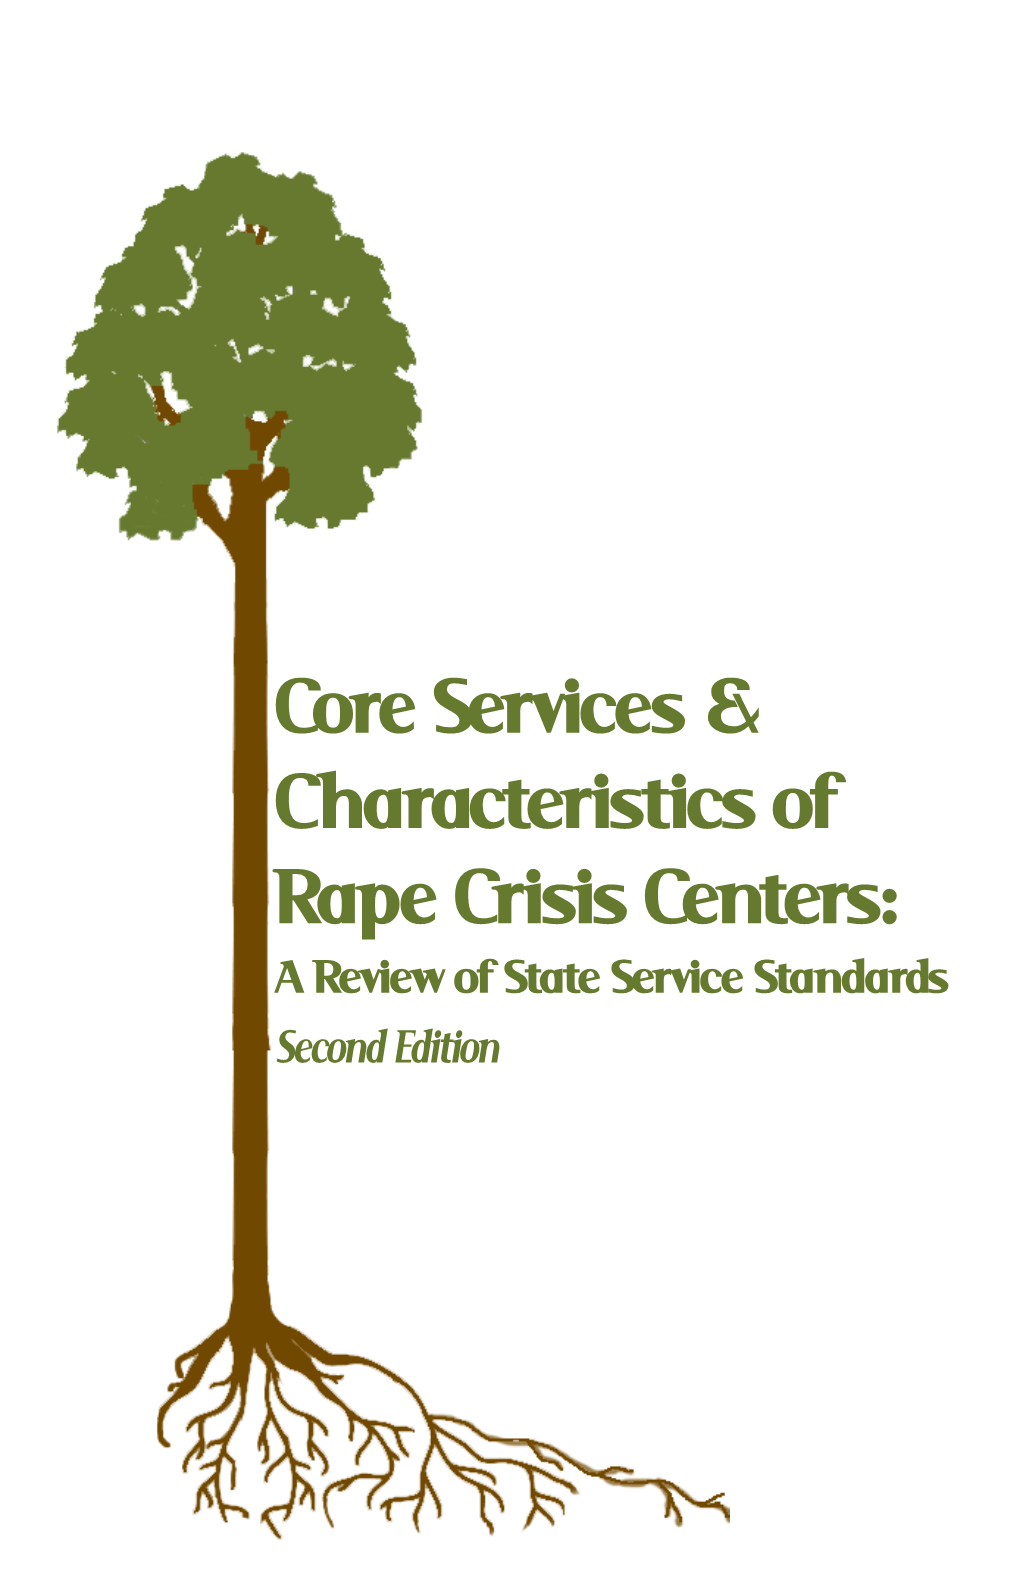 Core Services & Characteristics of Rape Crisis Centers